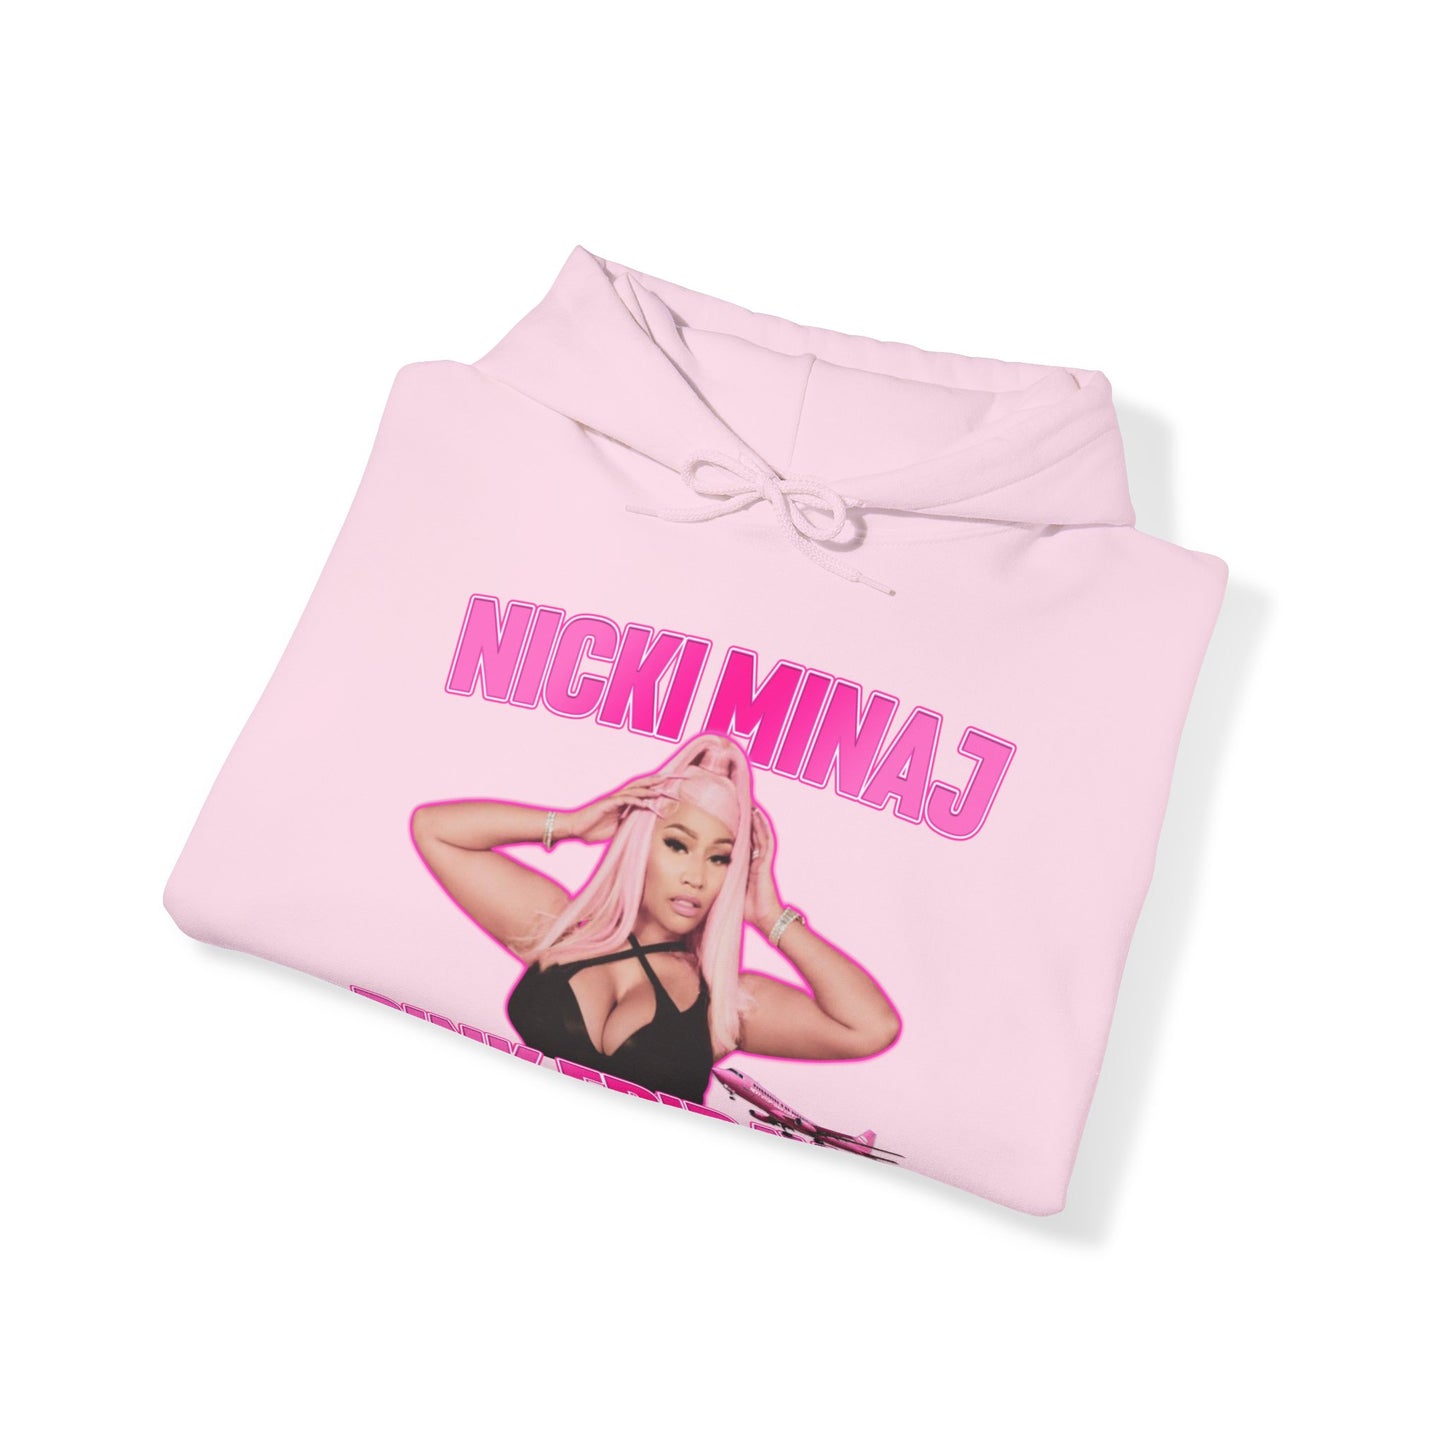 Nicki Minaj Pink Friday 2 Hooded Sweatshirt